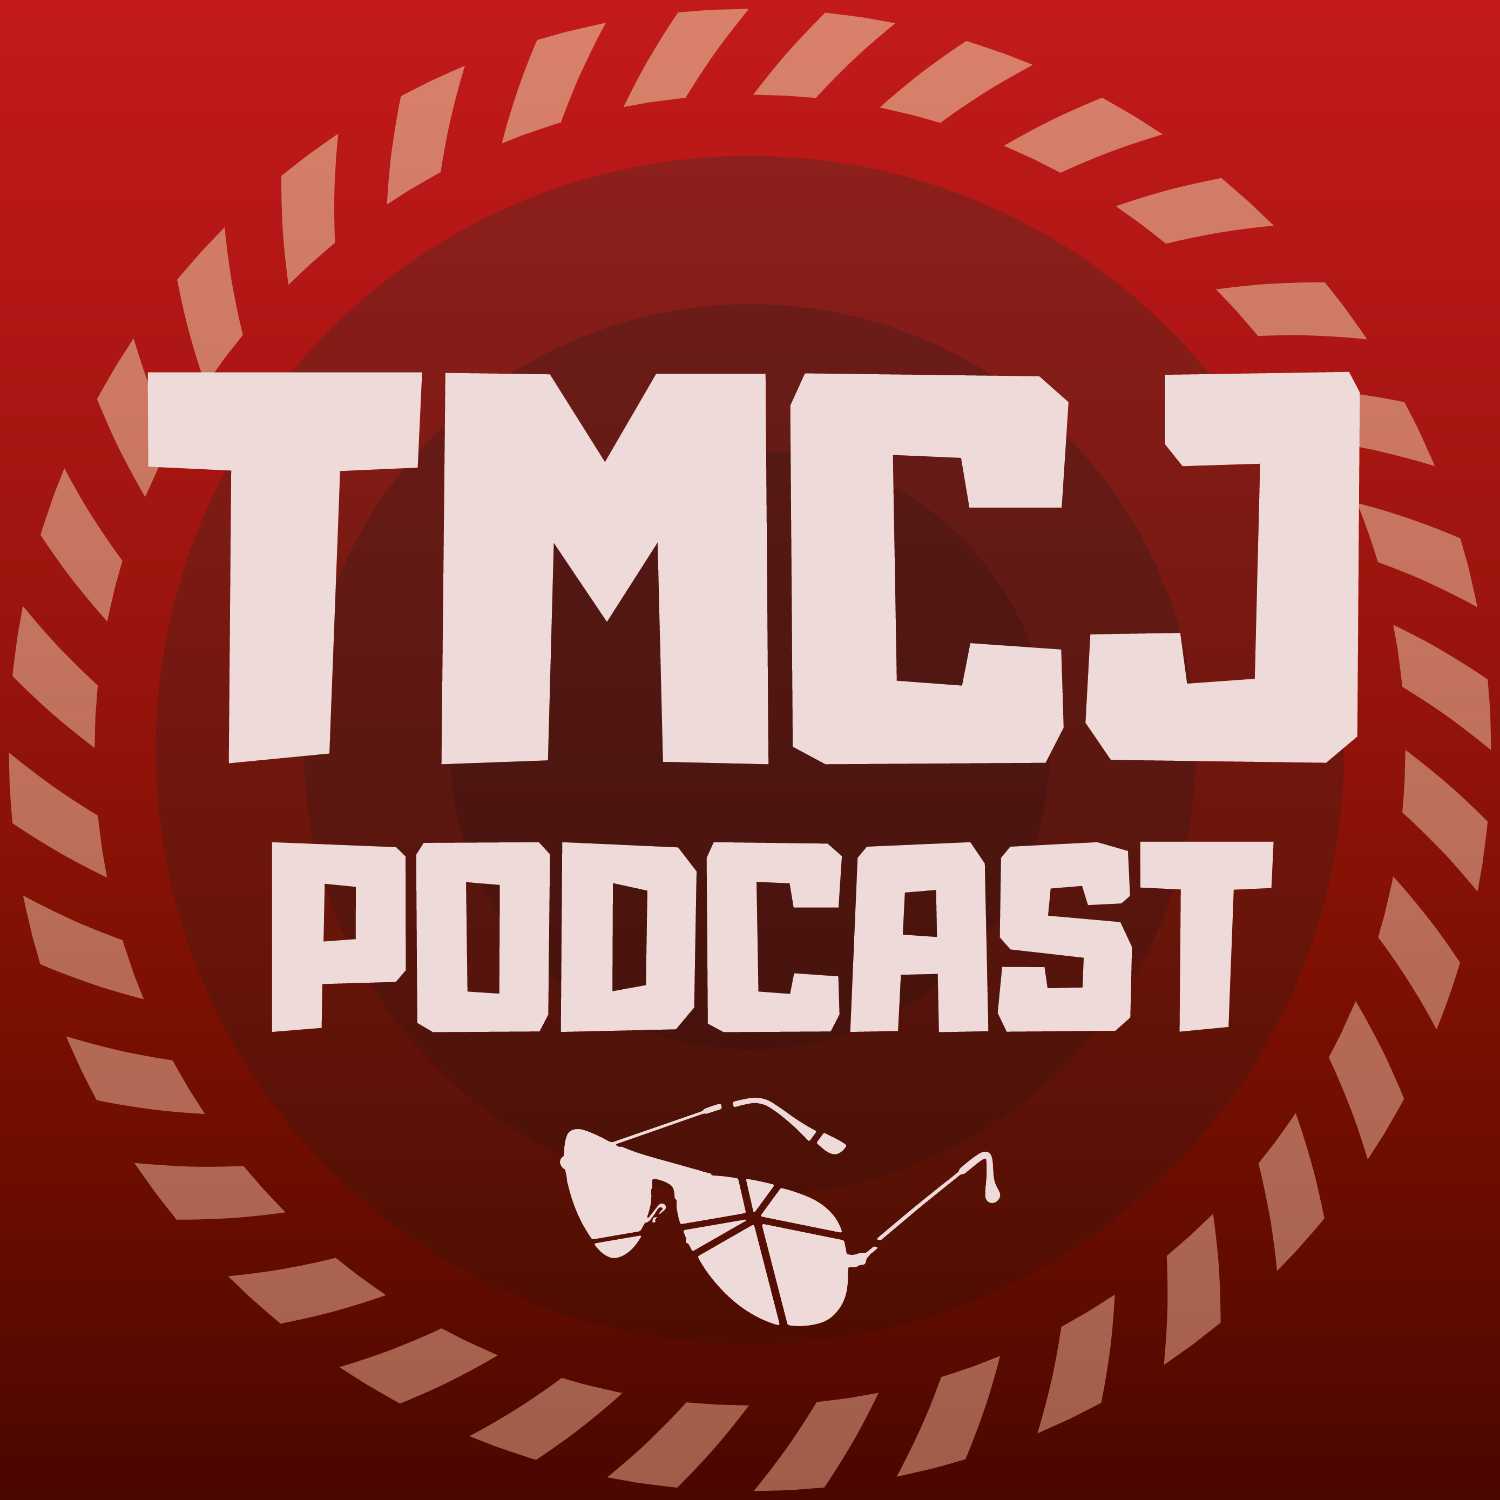 TMCJ Podcast